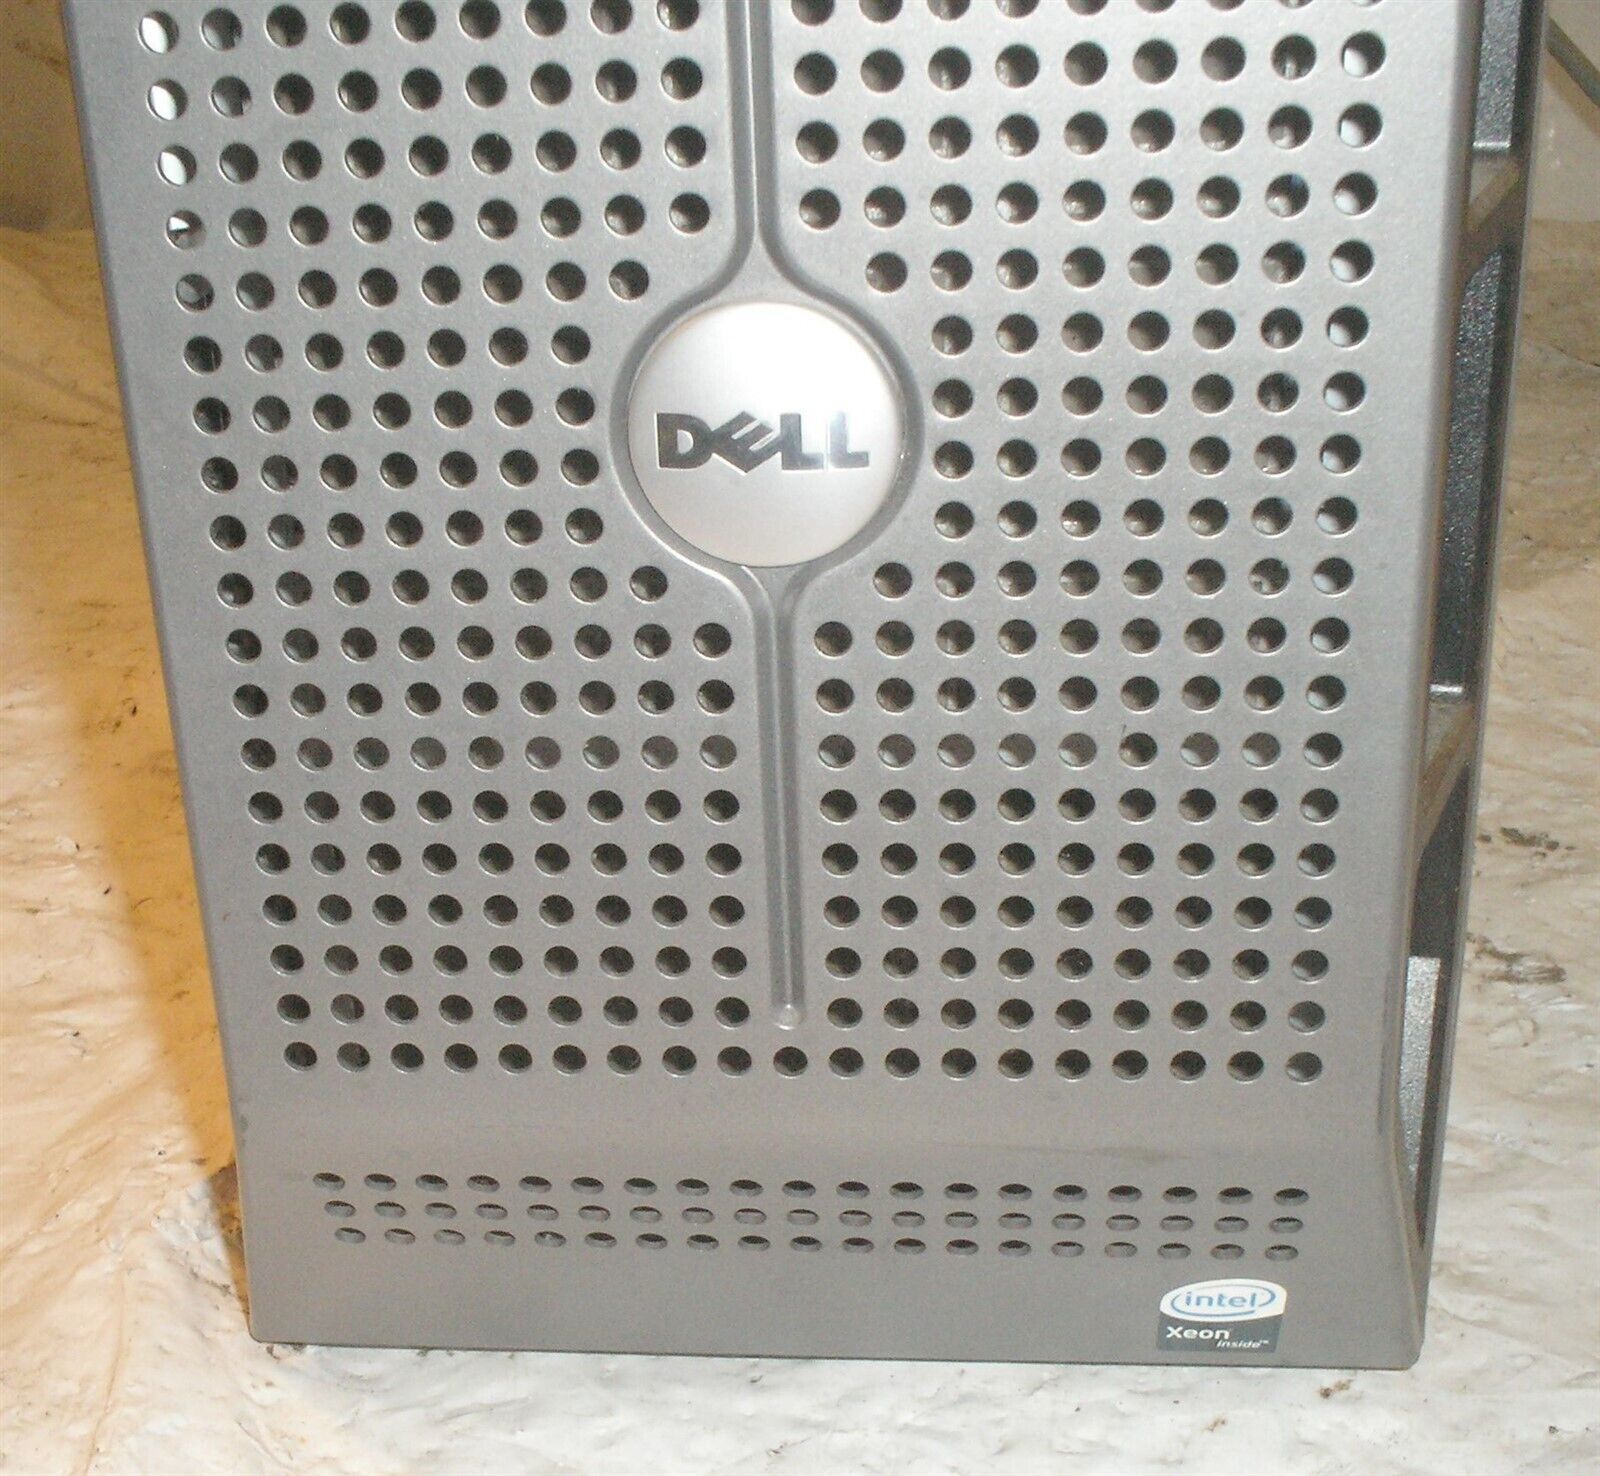 Primary image for Dell Poweredge T300 Server Model: MMU